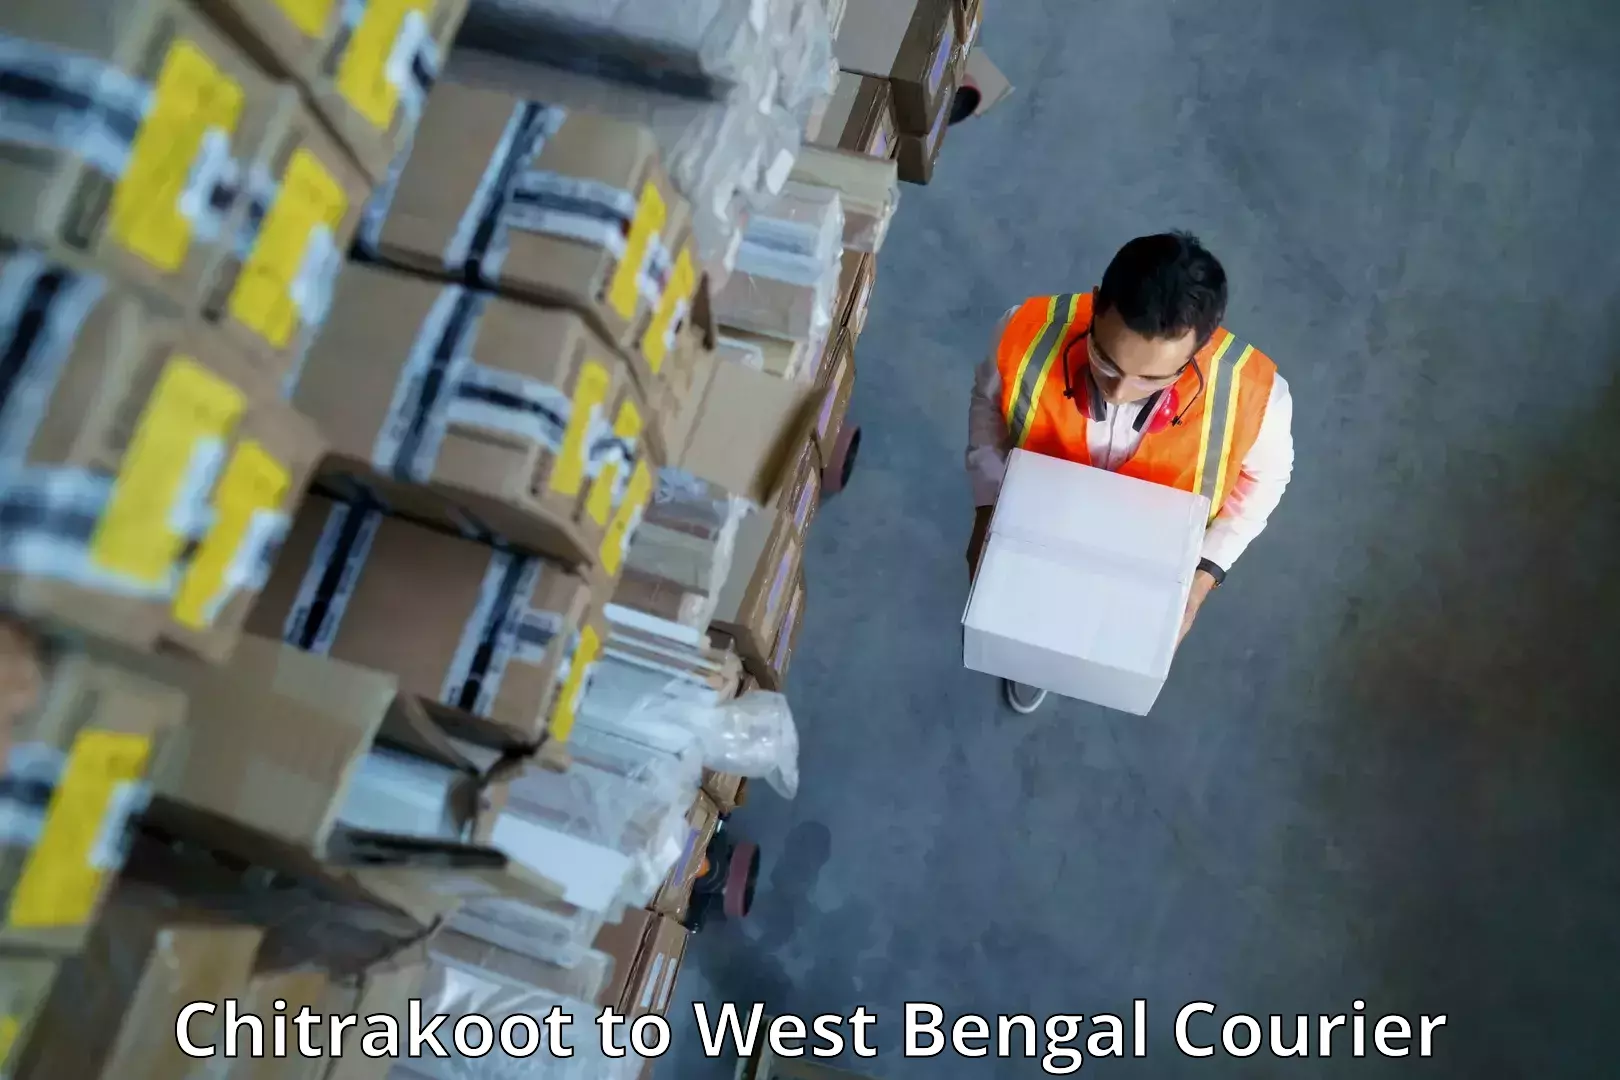 Professional courier handling Chitrakoot to Chittaranjan